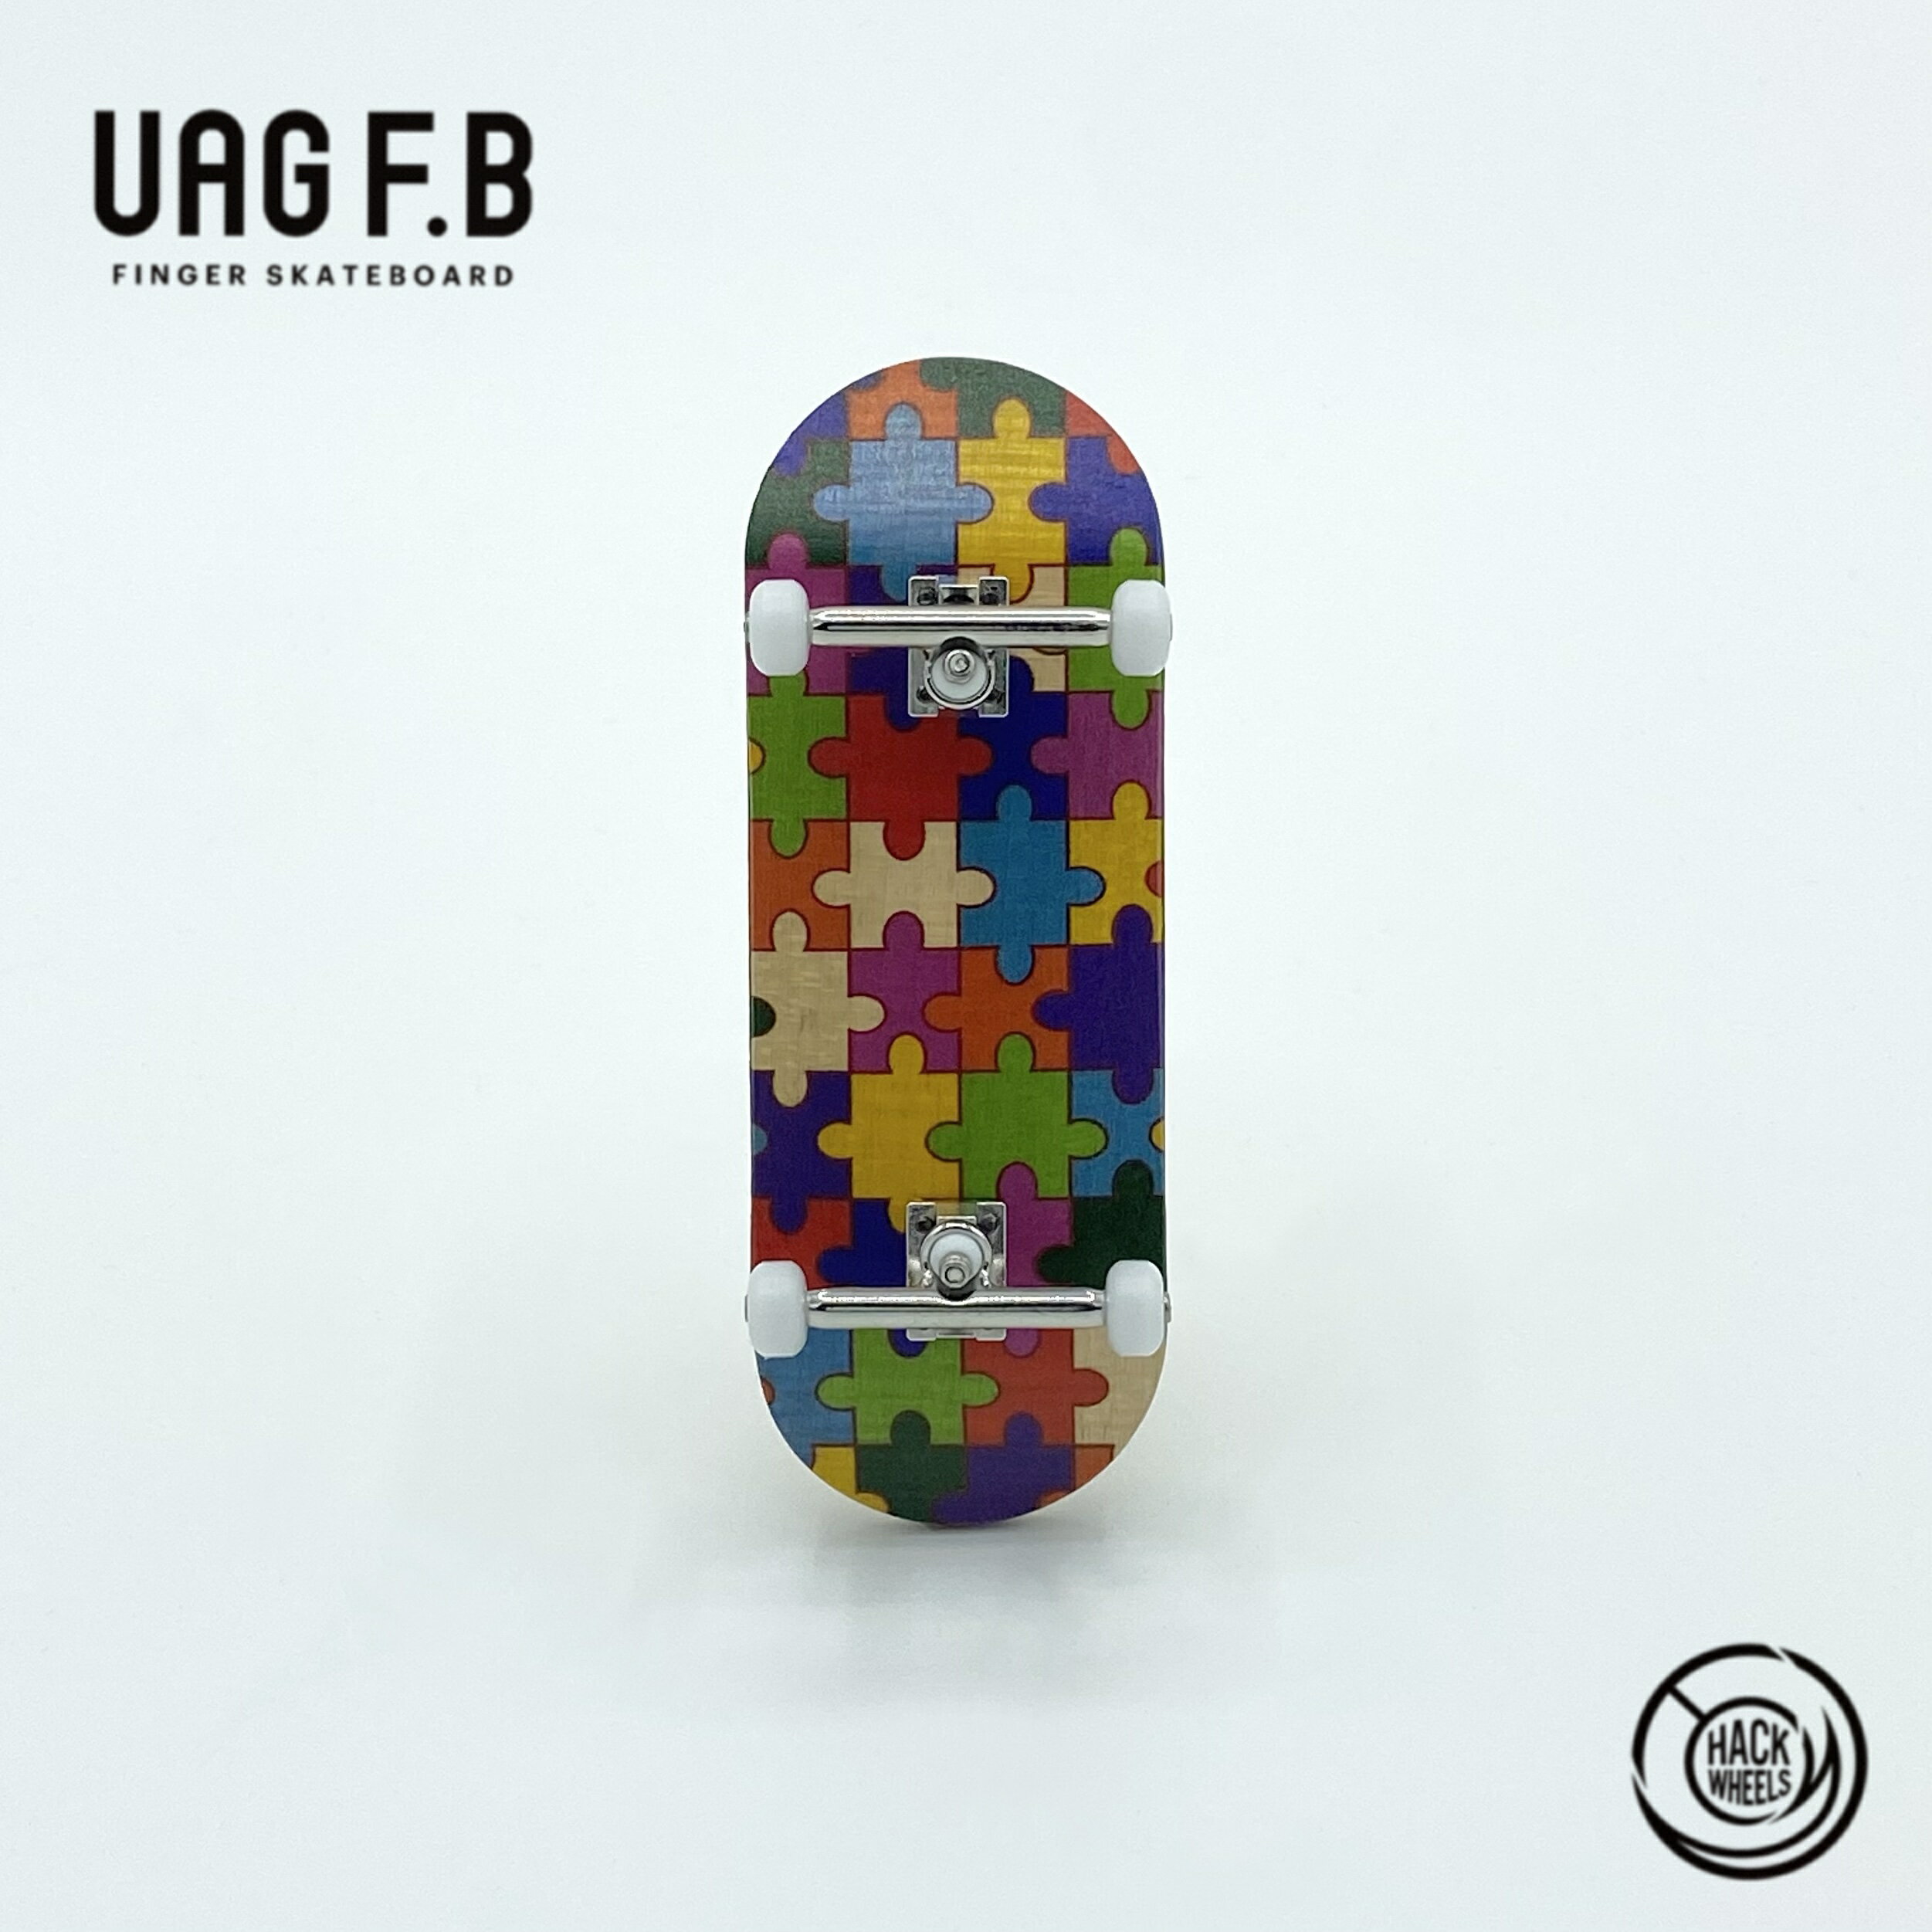 UAG F.B プロコンプリート / Puzzle / finger skate board / 指スケ / 指スケボー